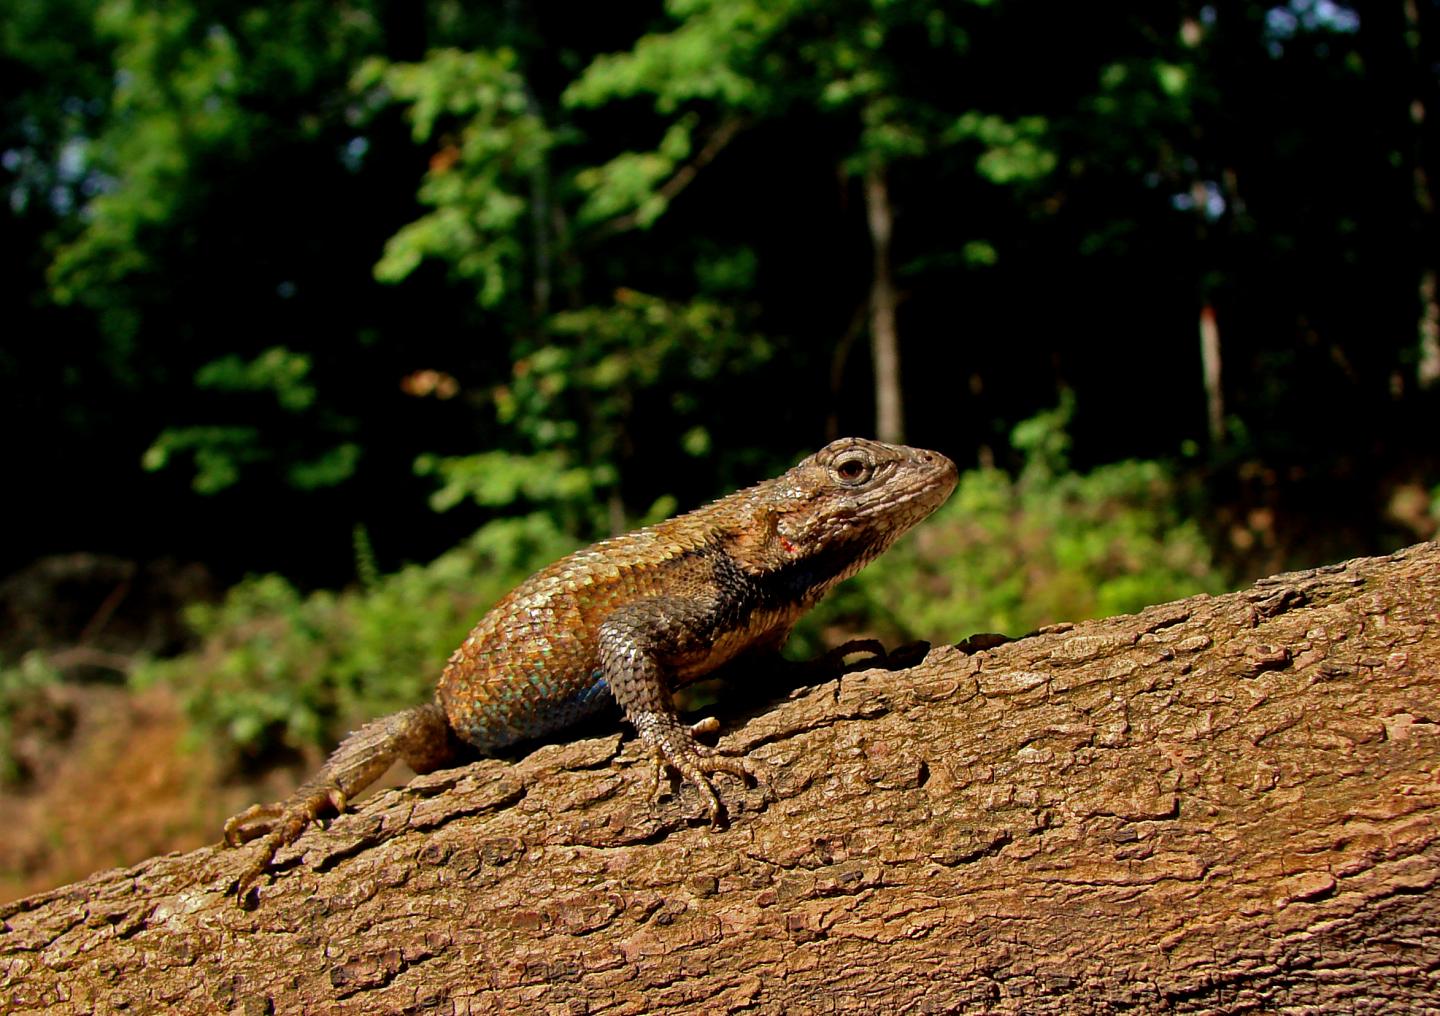 Lizard on Log